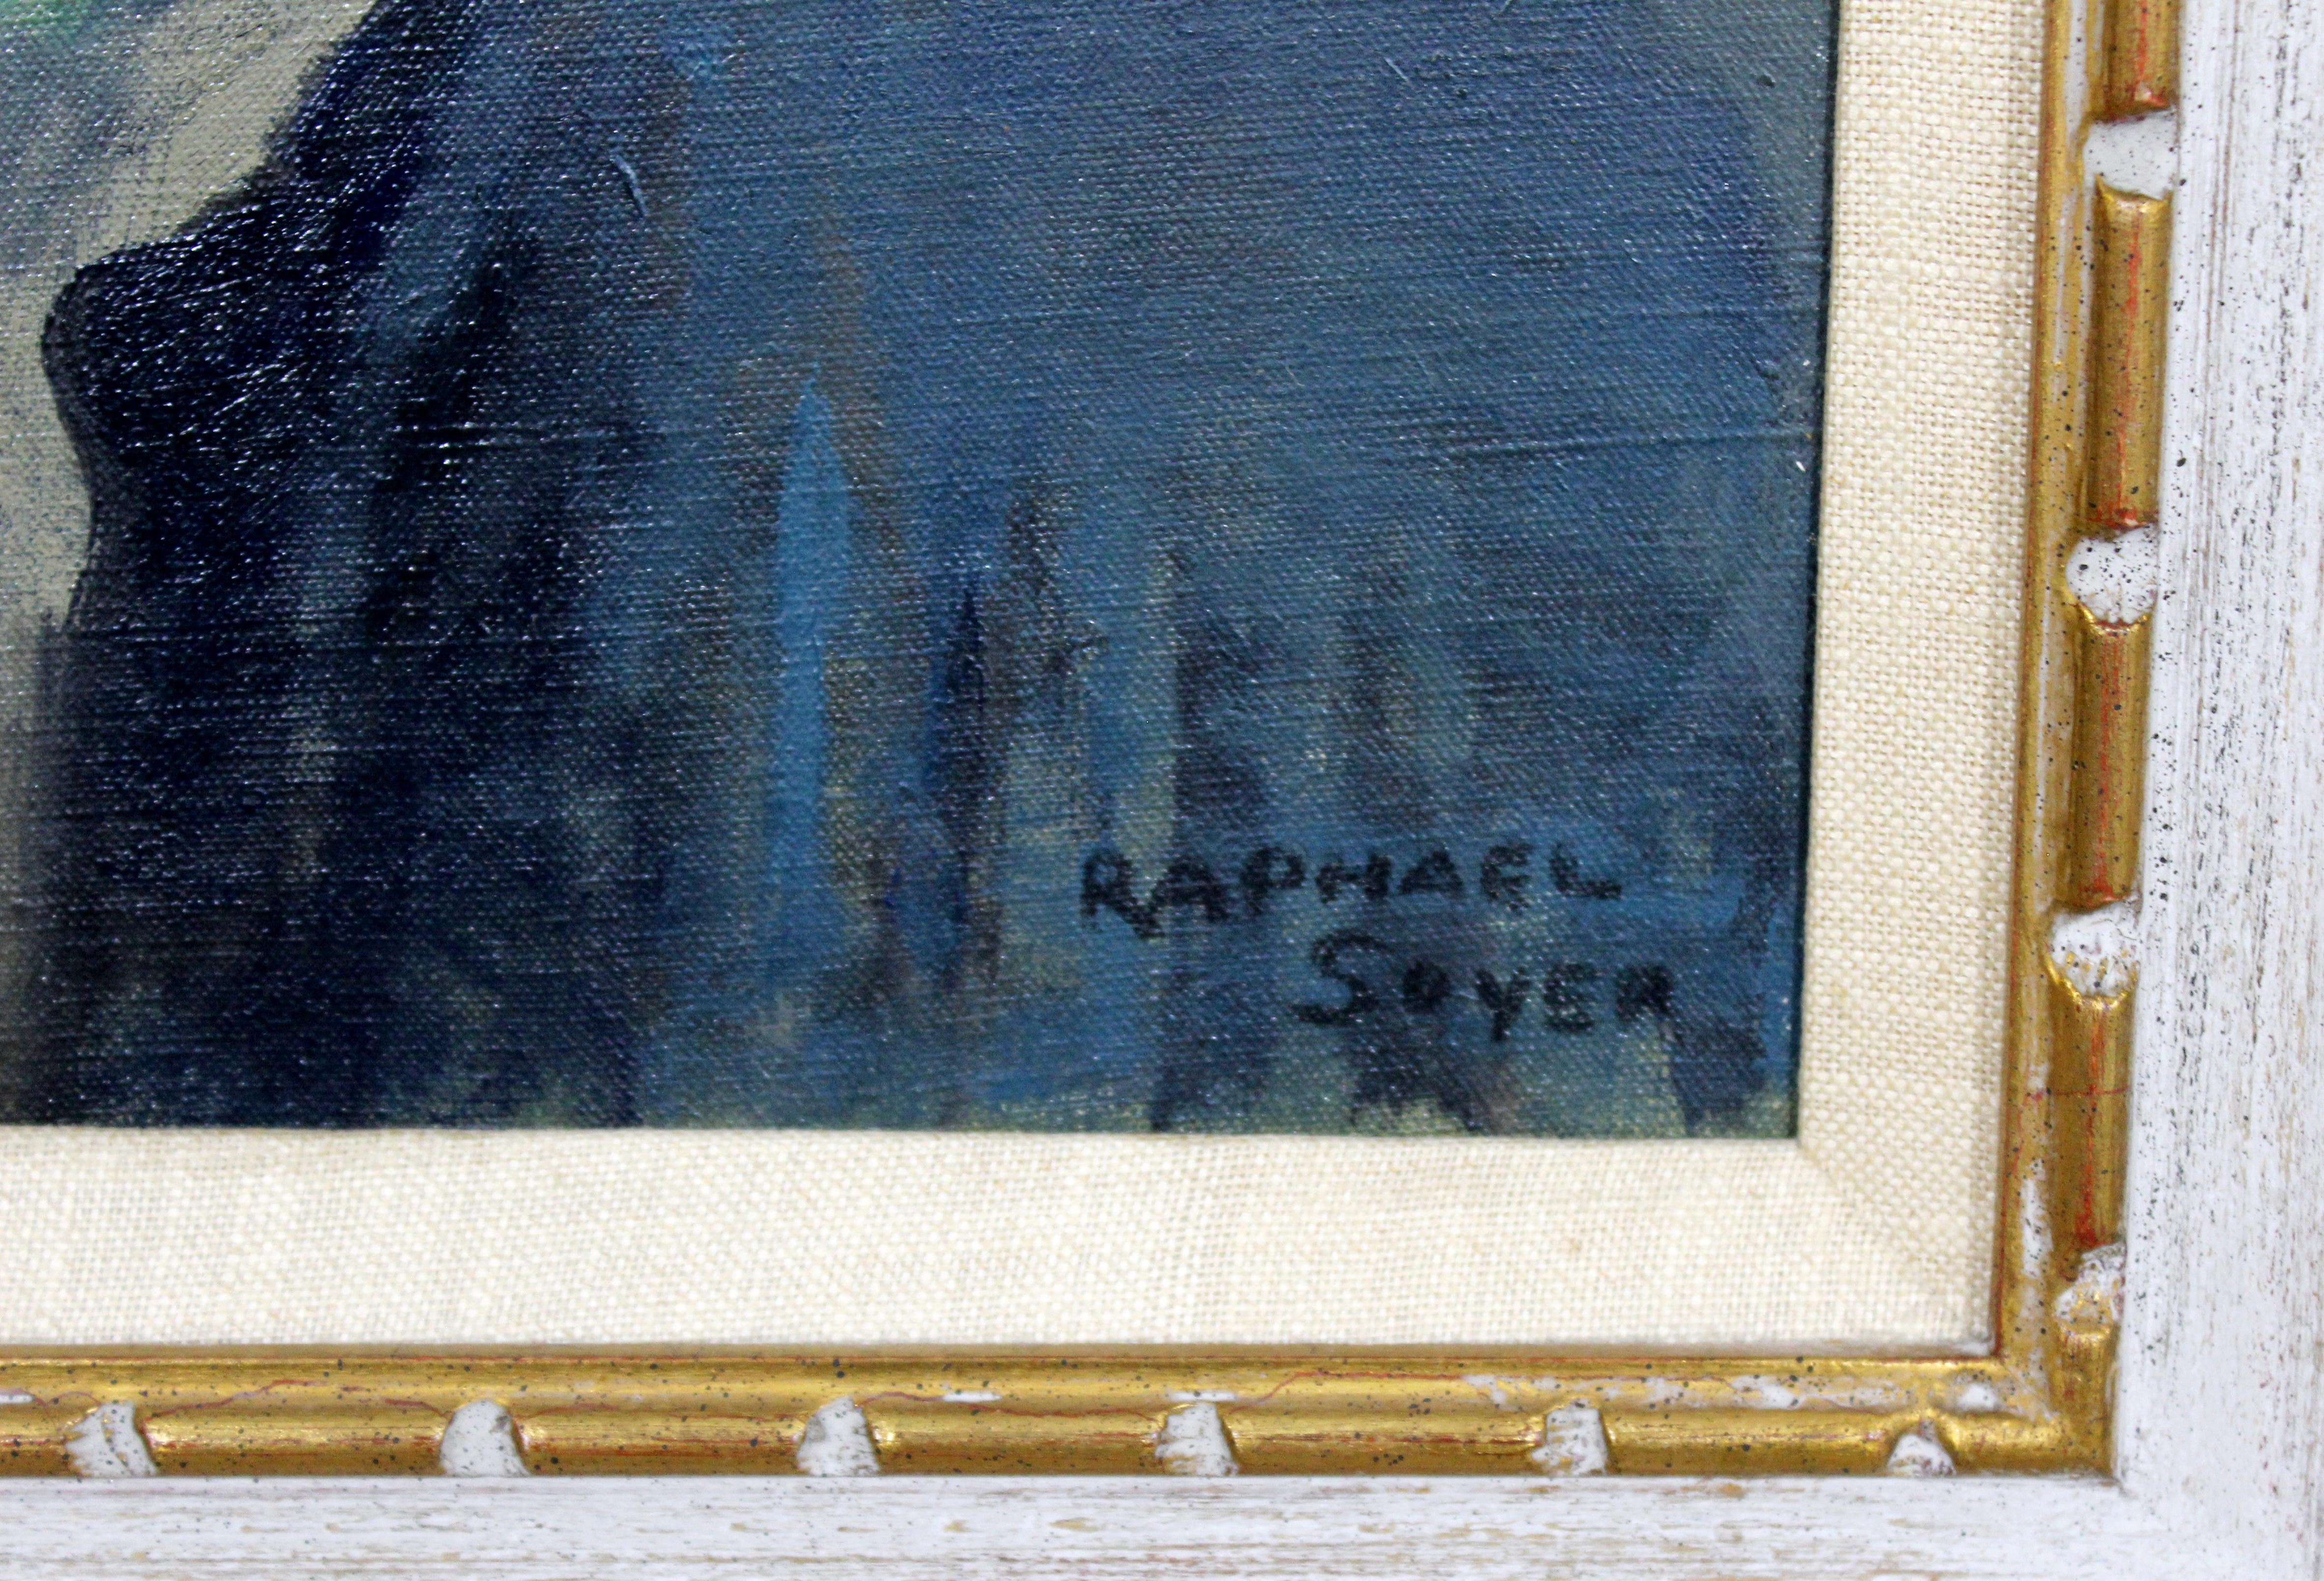 Mid-Century Modern Framed Oil on Canvas Painting Portrait Signed Raphael Soyer 1